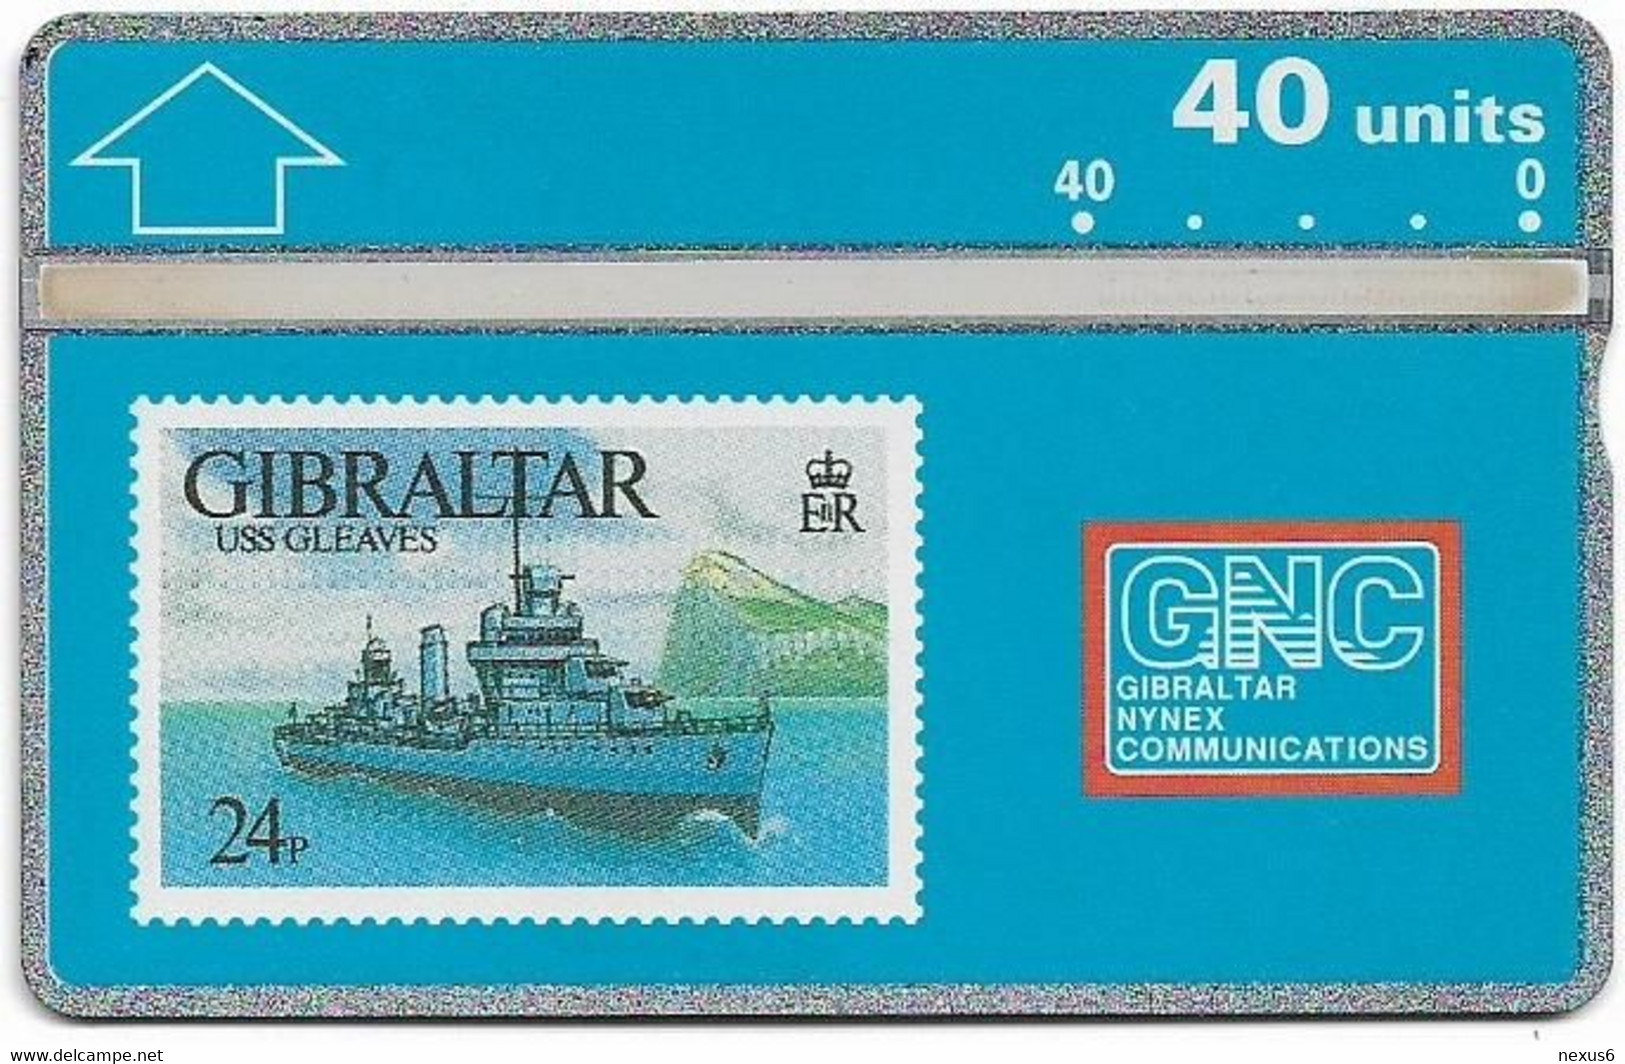 Gibraltar - GNC - L&G - Warships '93 Stamps - USS Gleaves - 306A - 06.1993, 40Units, 20.000ex, Mint - Gibraltar